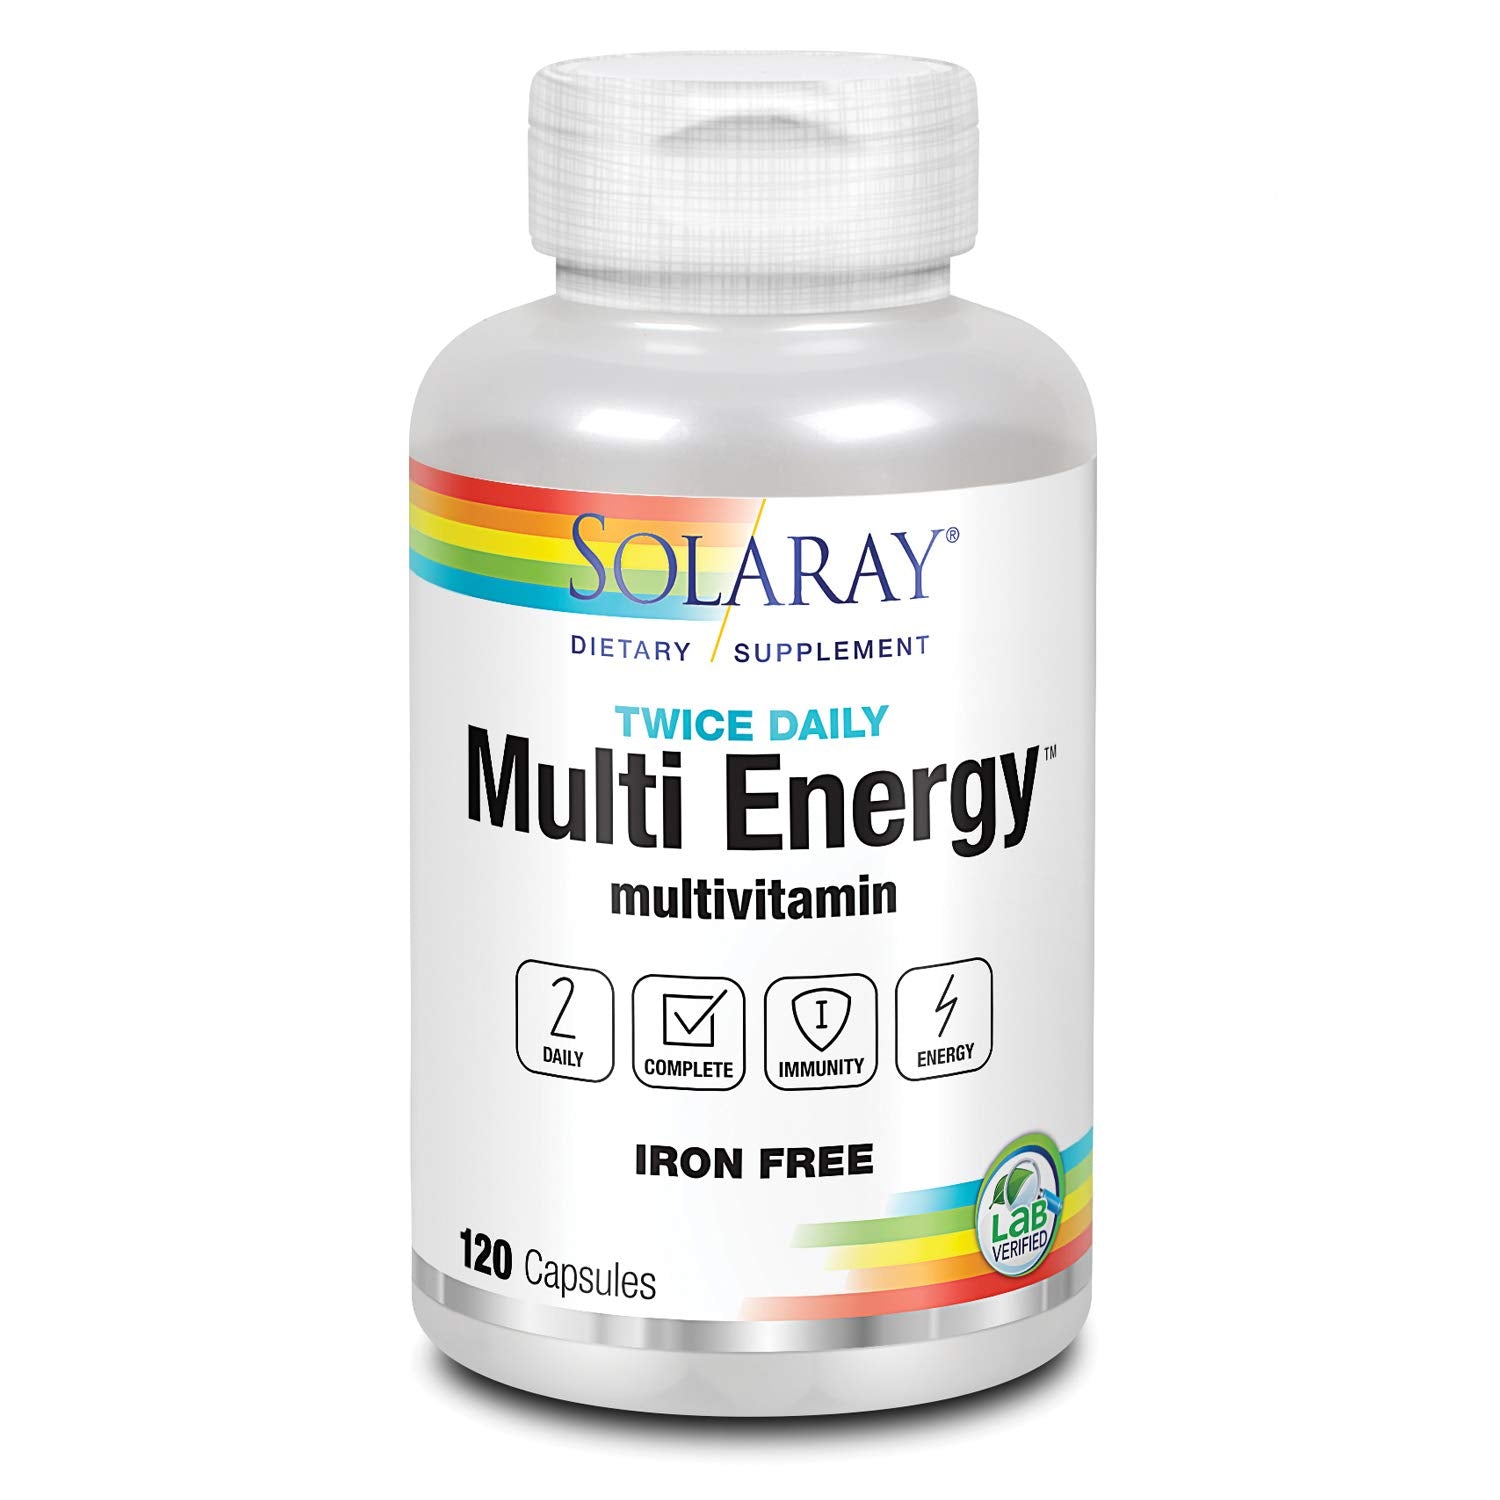 Solaray Twice Daily Multi Energy Multi-Vitamin Iron-Free 120ct Capsule